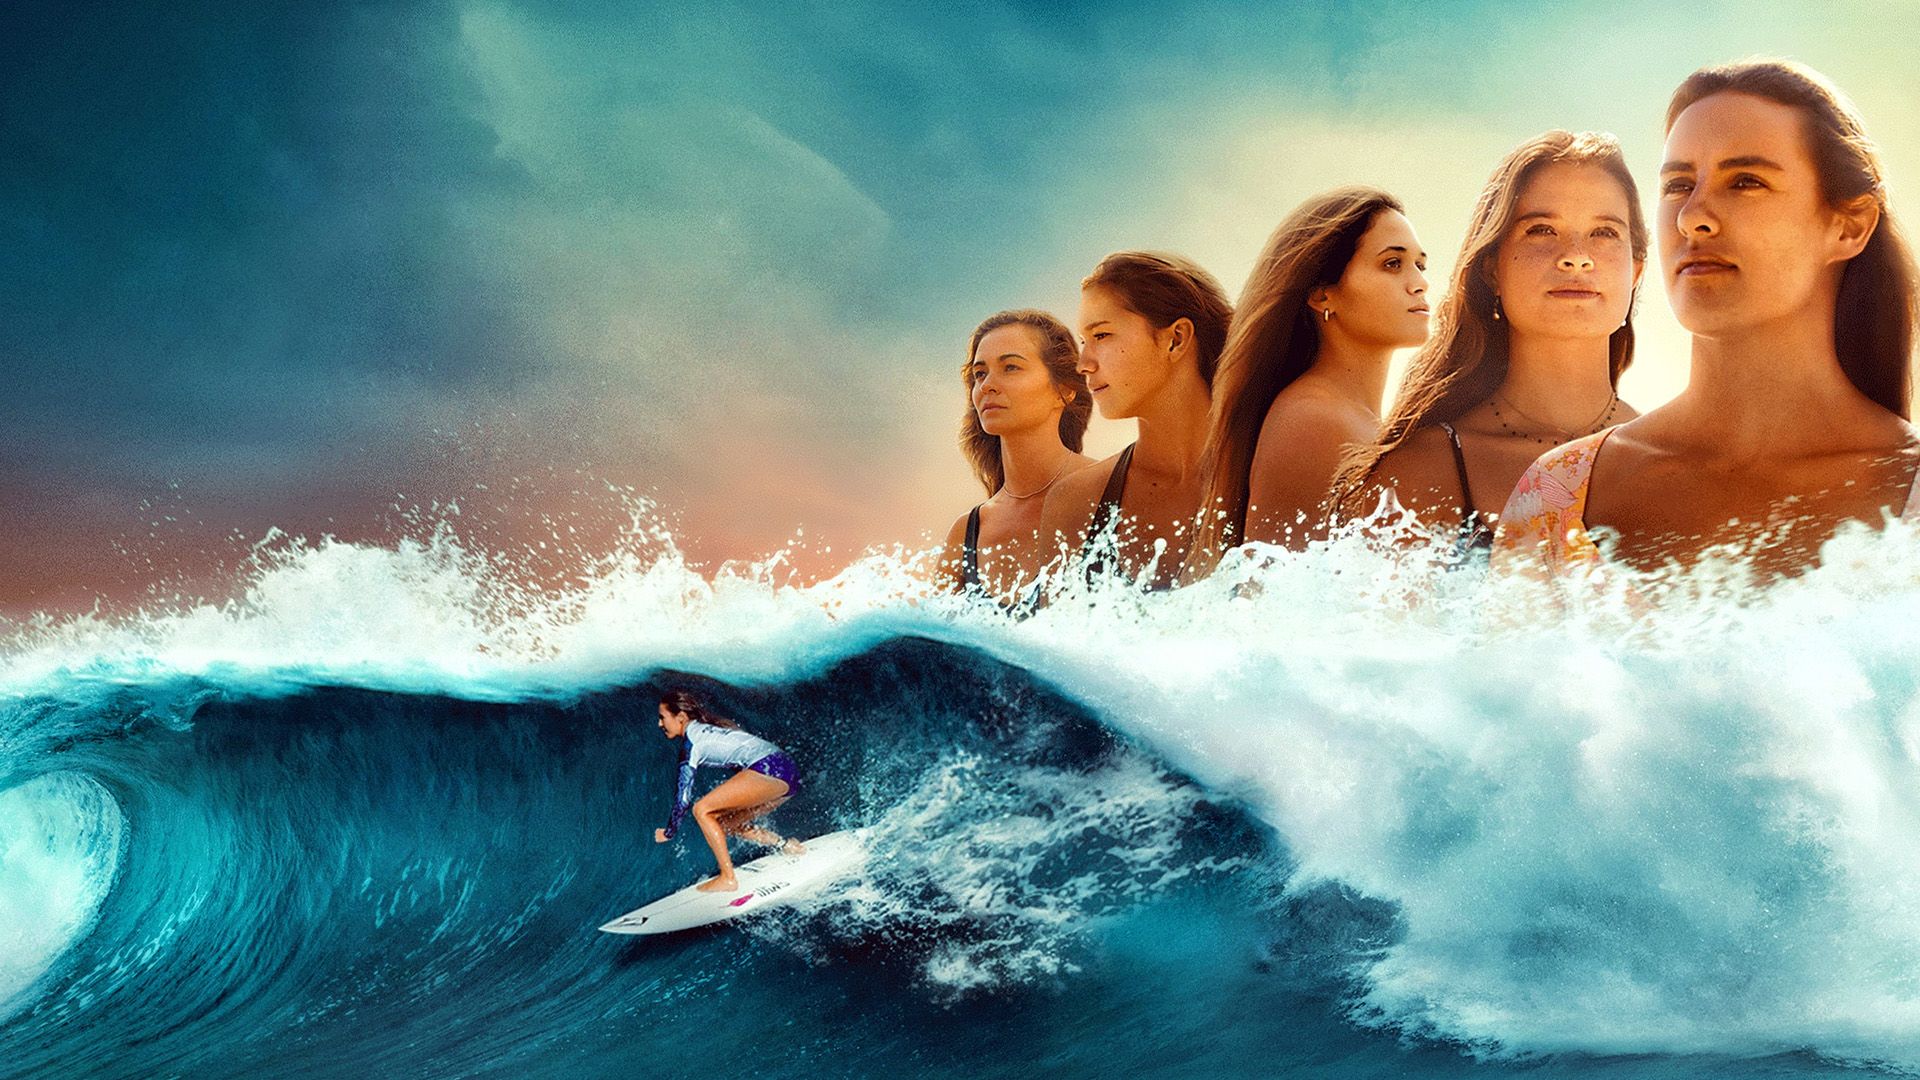 Surf Girls Hawai'i background